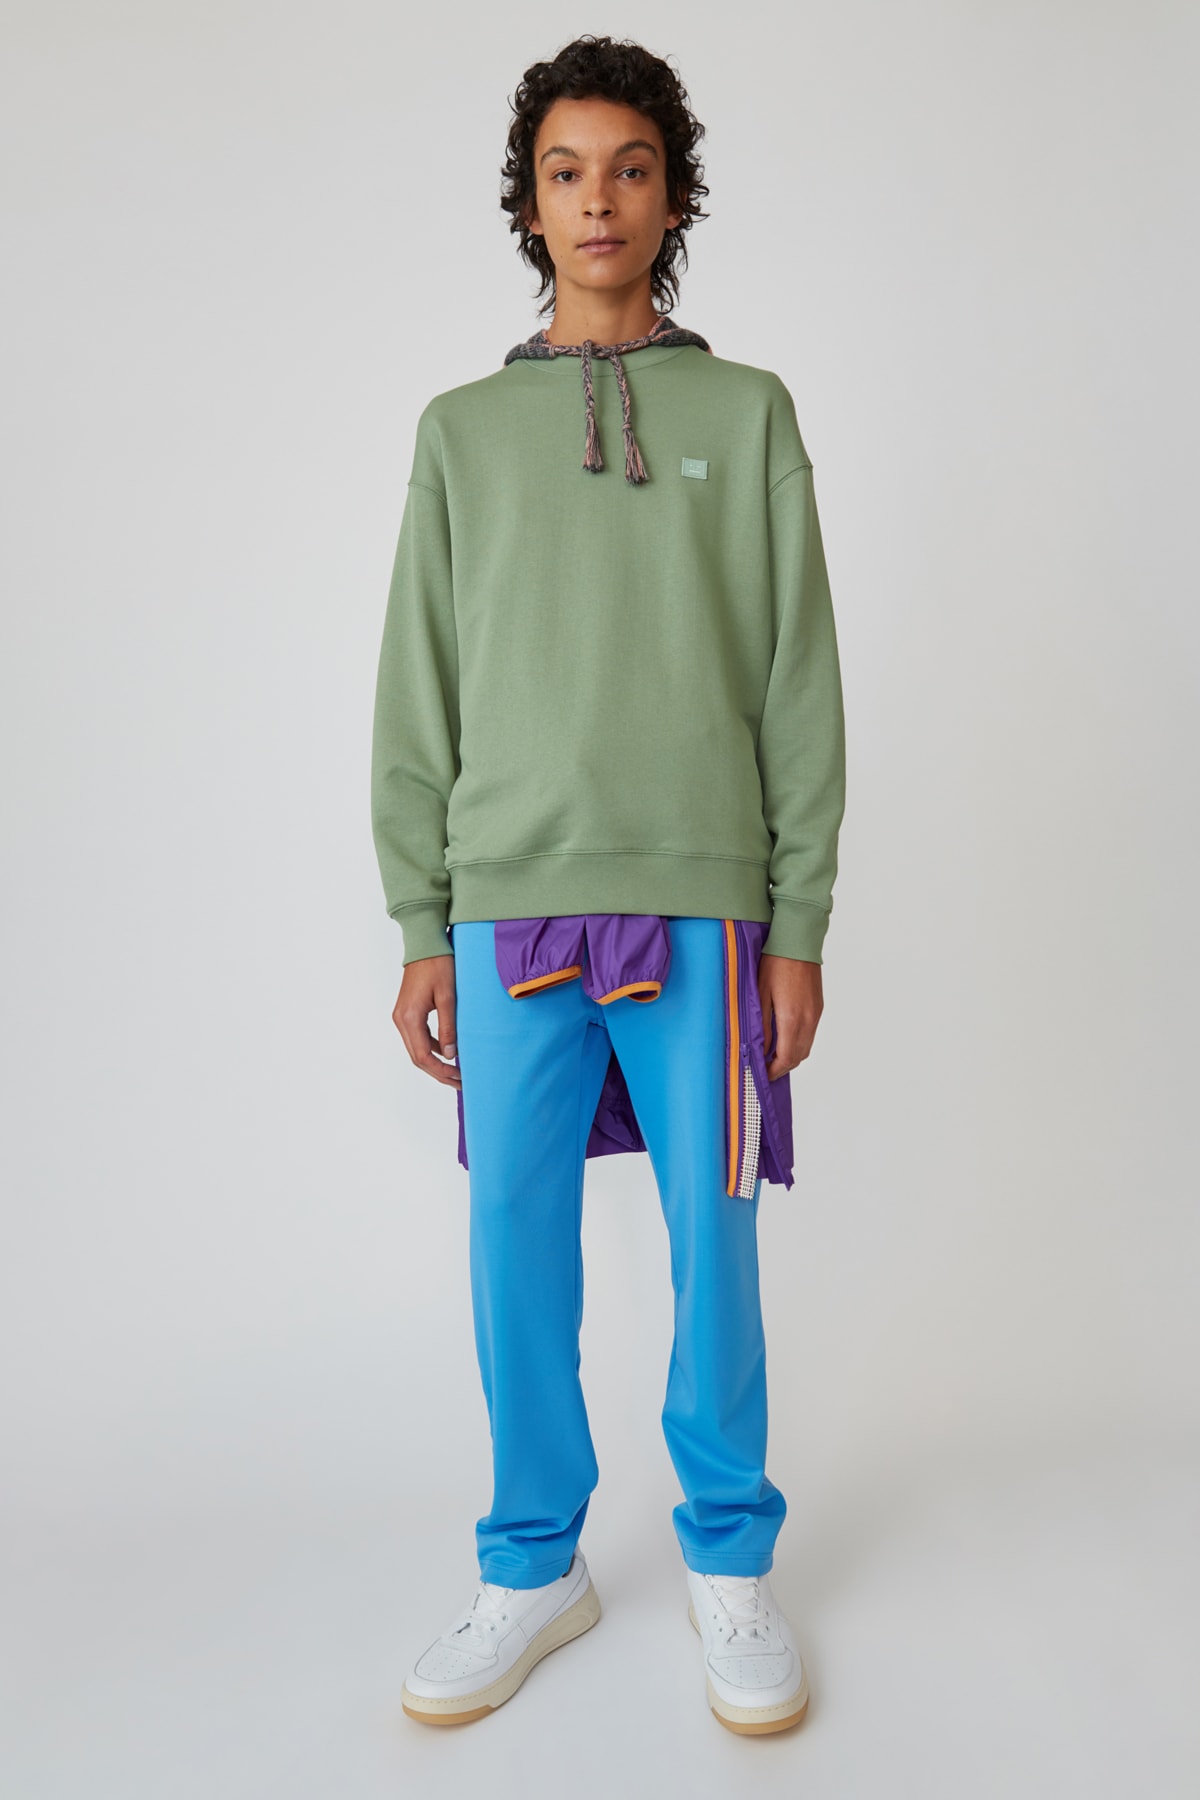 Acne Studios Spring/Summer 2019 Face Collection Sweatshirt Green Pants Blue